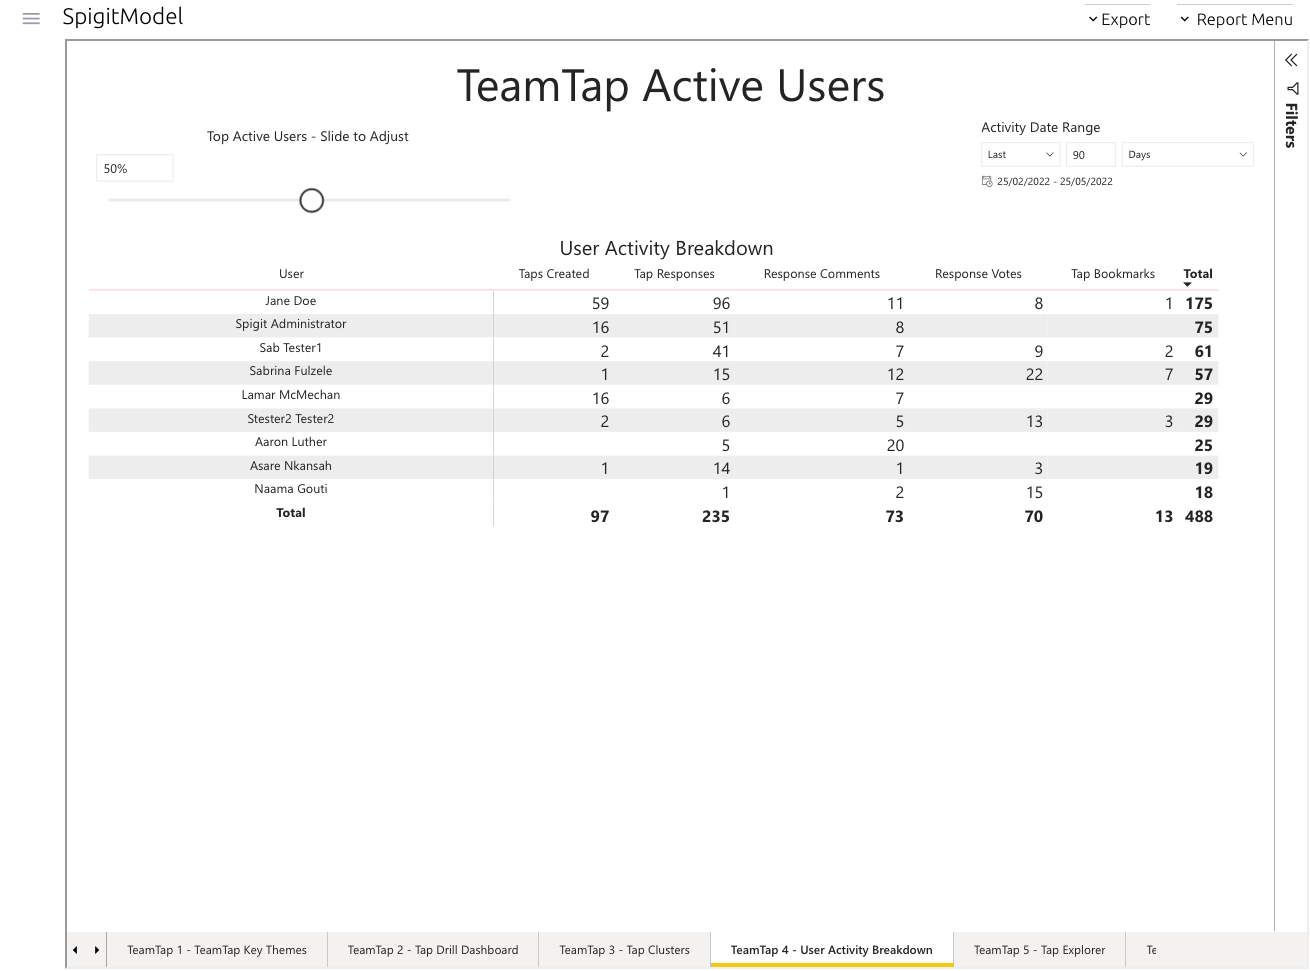 TeamTap 4 - User Activity Breakdown.png